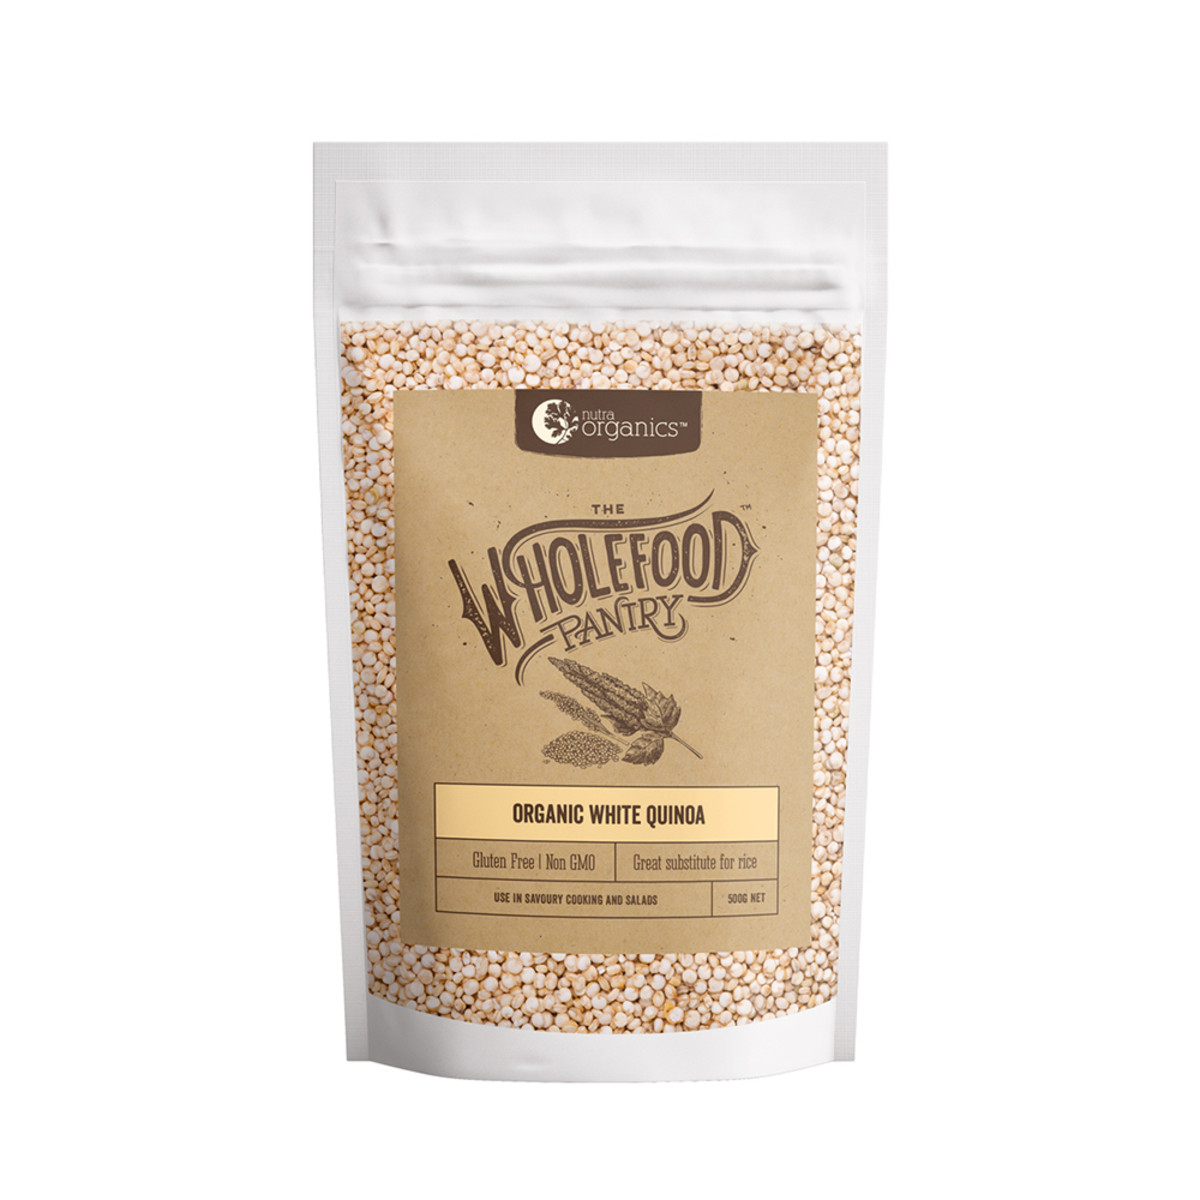 NUTRA ORGANICS - THE WHOLEFOOD PANTRY Organic White Quinoa